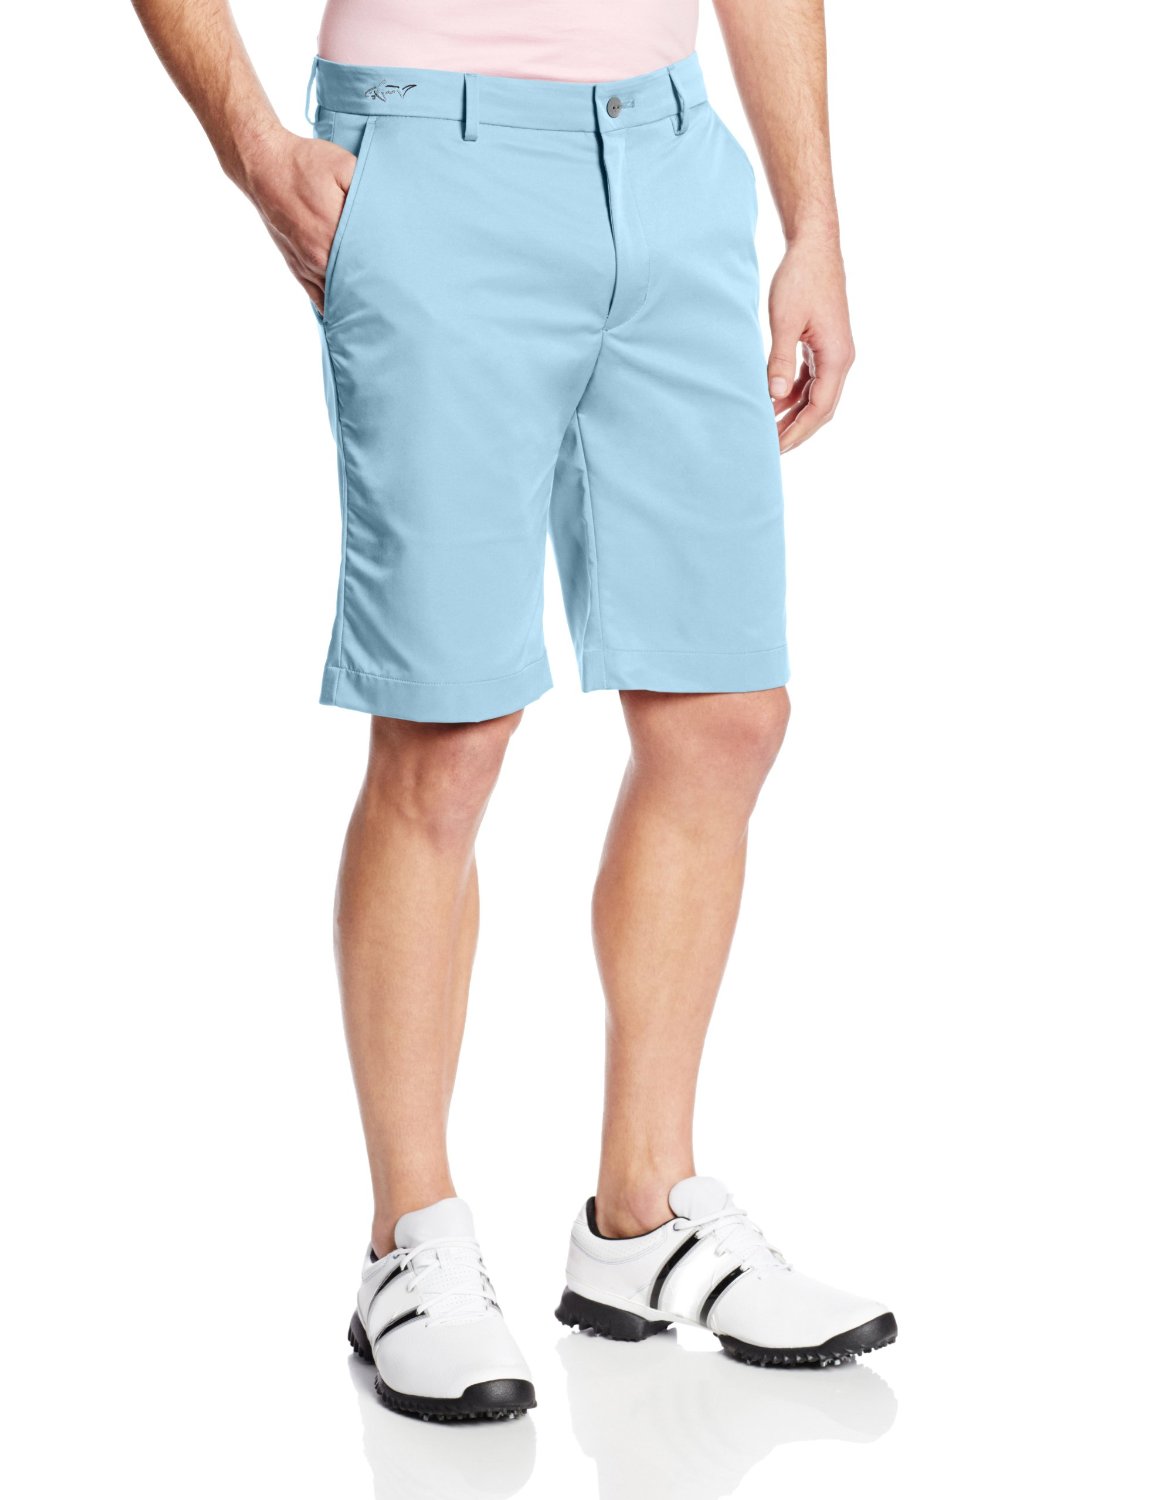 Greg Norman Mens Golf Shorts